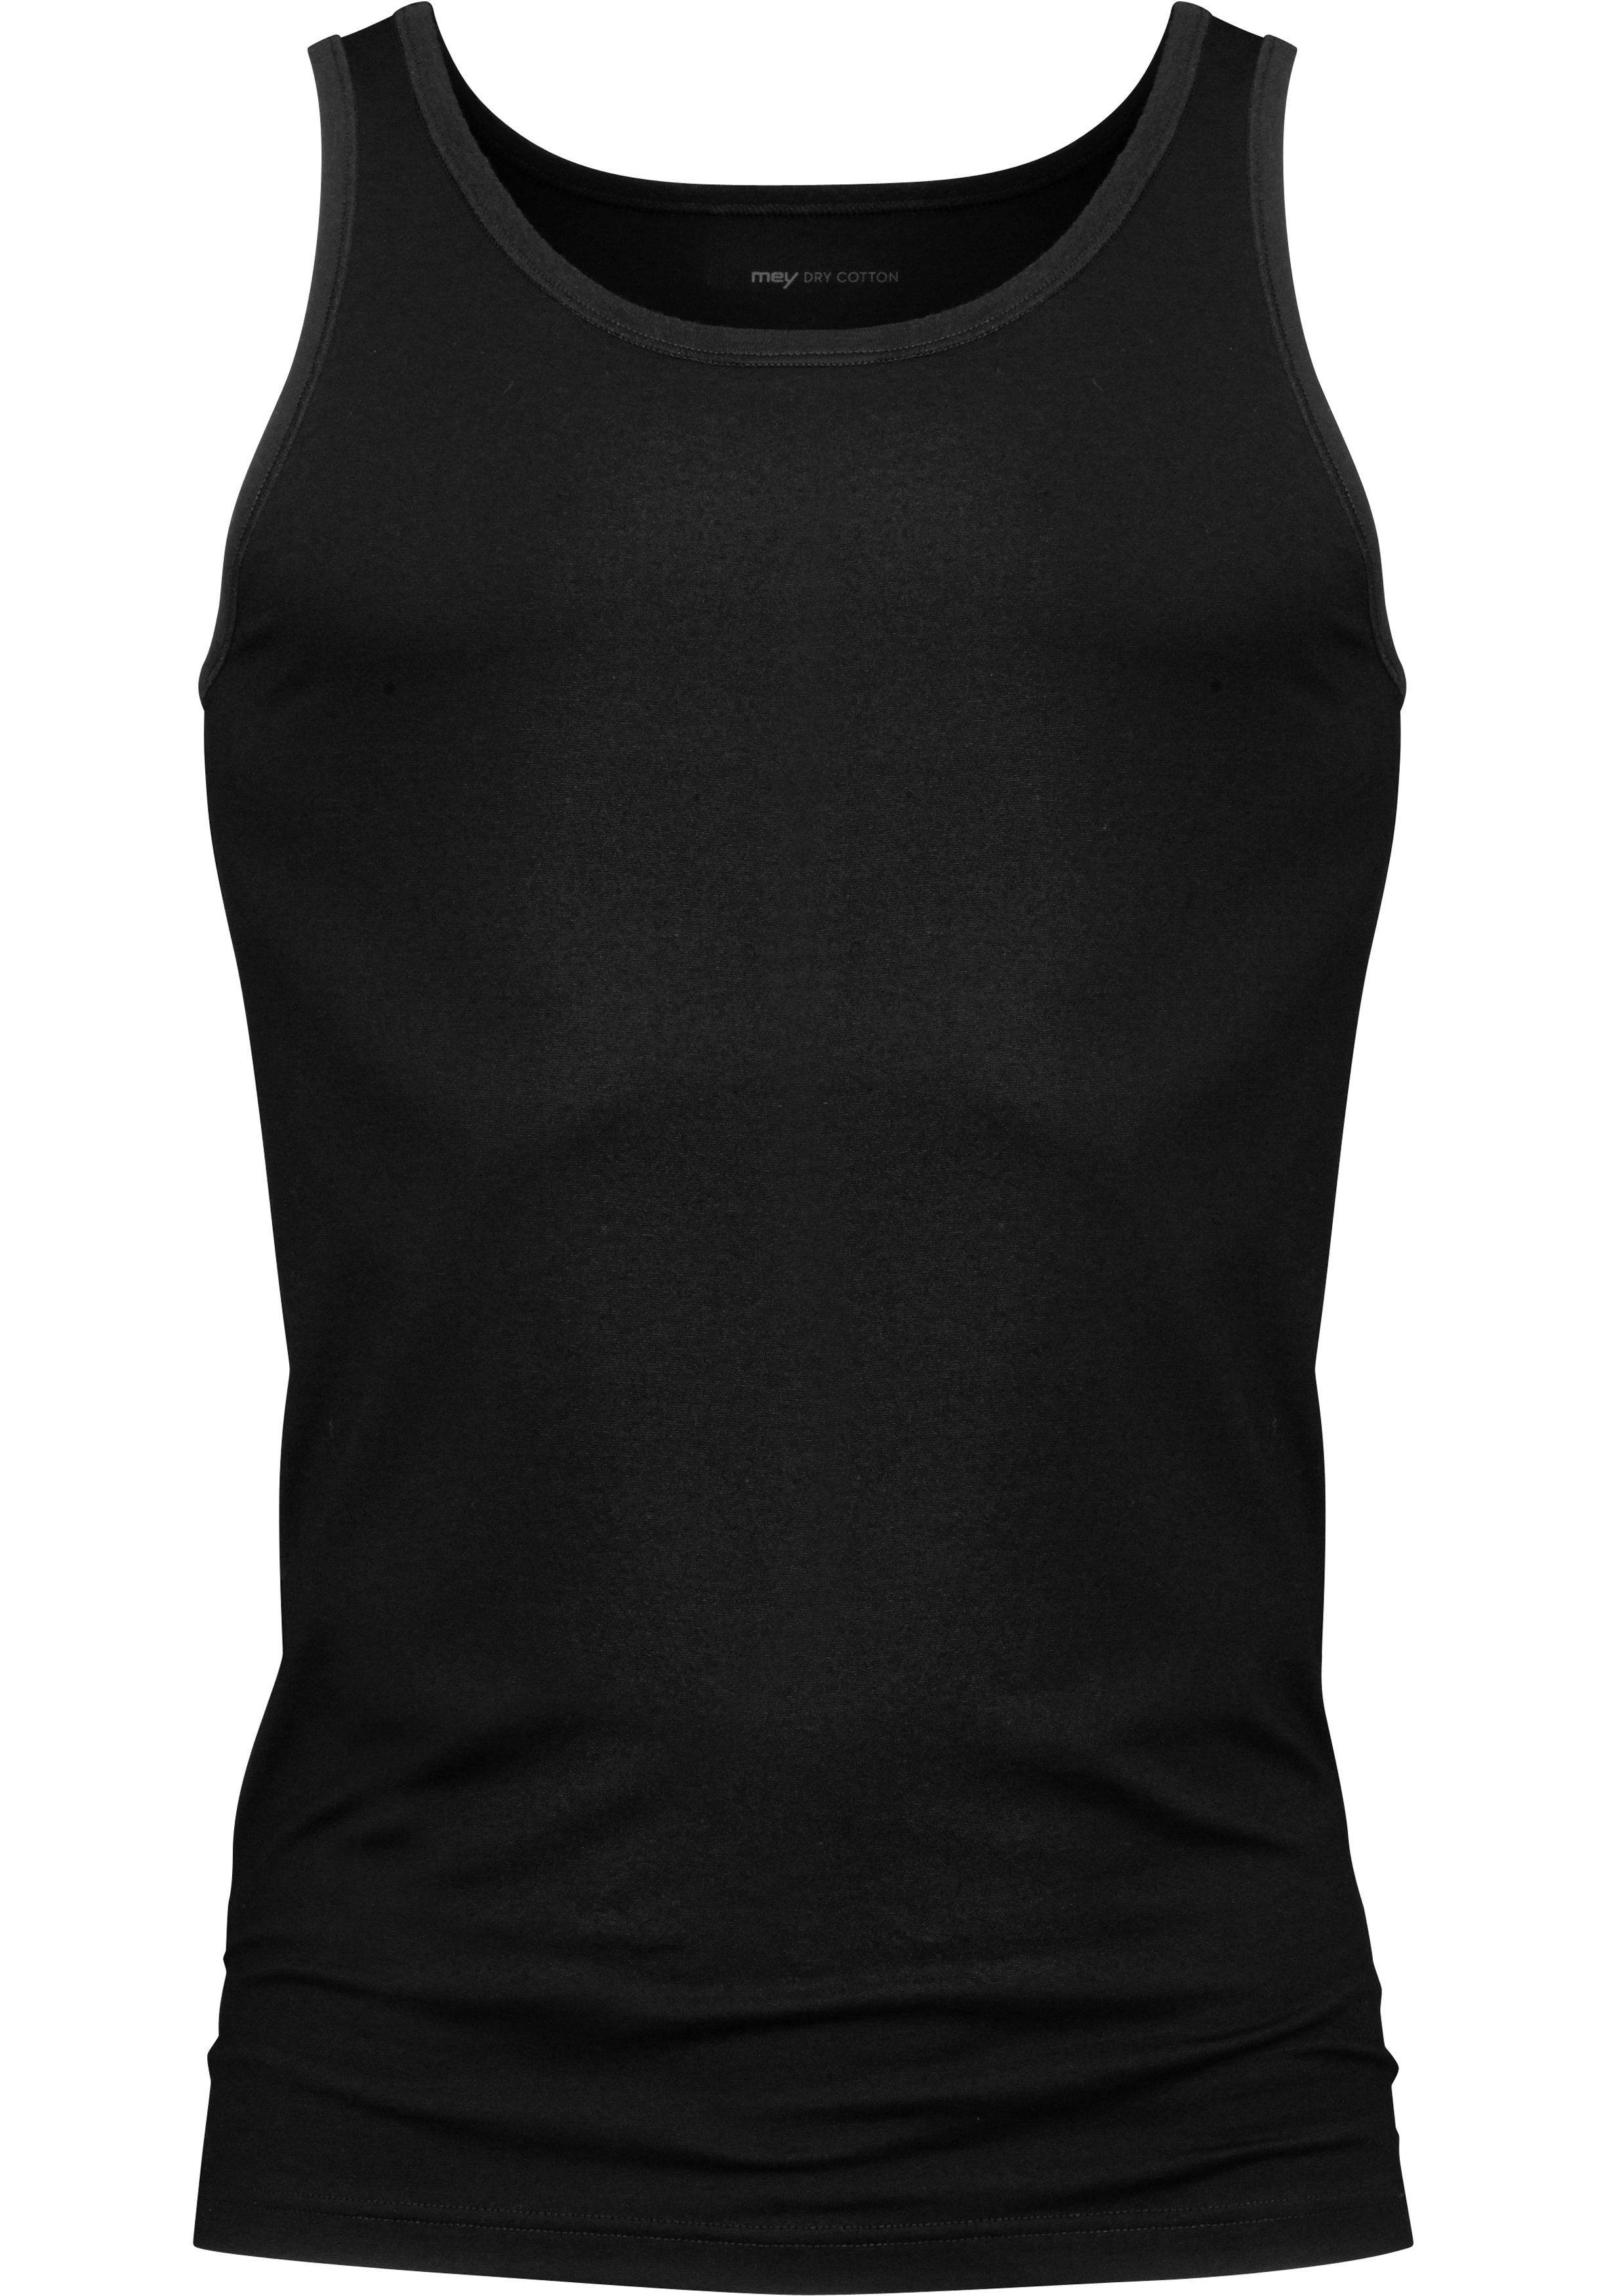 bron struik omroeper Mey Dry Cotton athletic shirt (1-pack), heren singlet, zwart - Zomer SALE  tot 50% korting